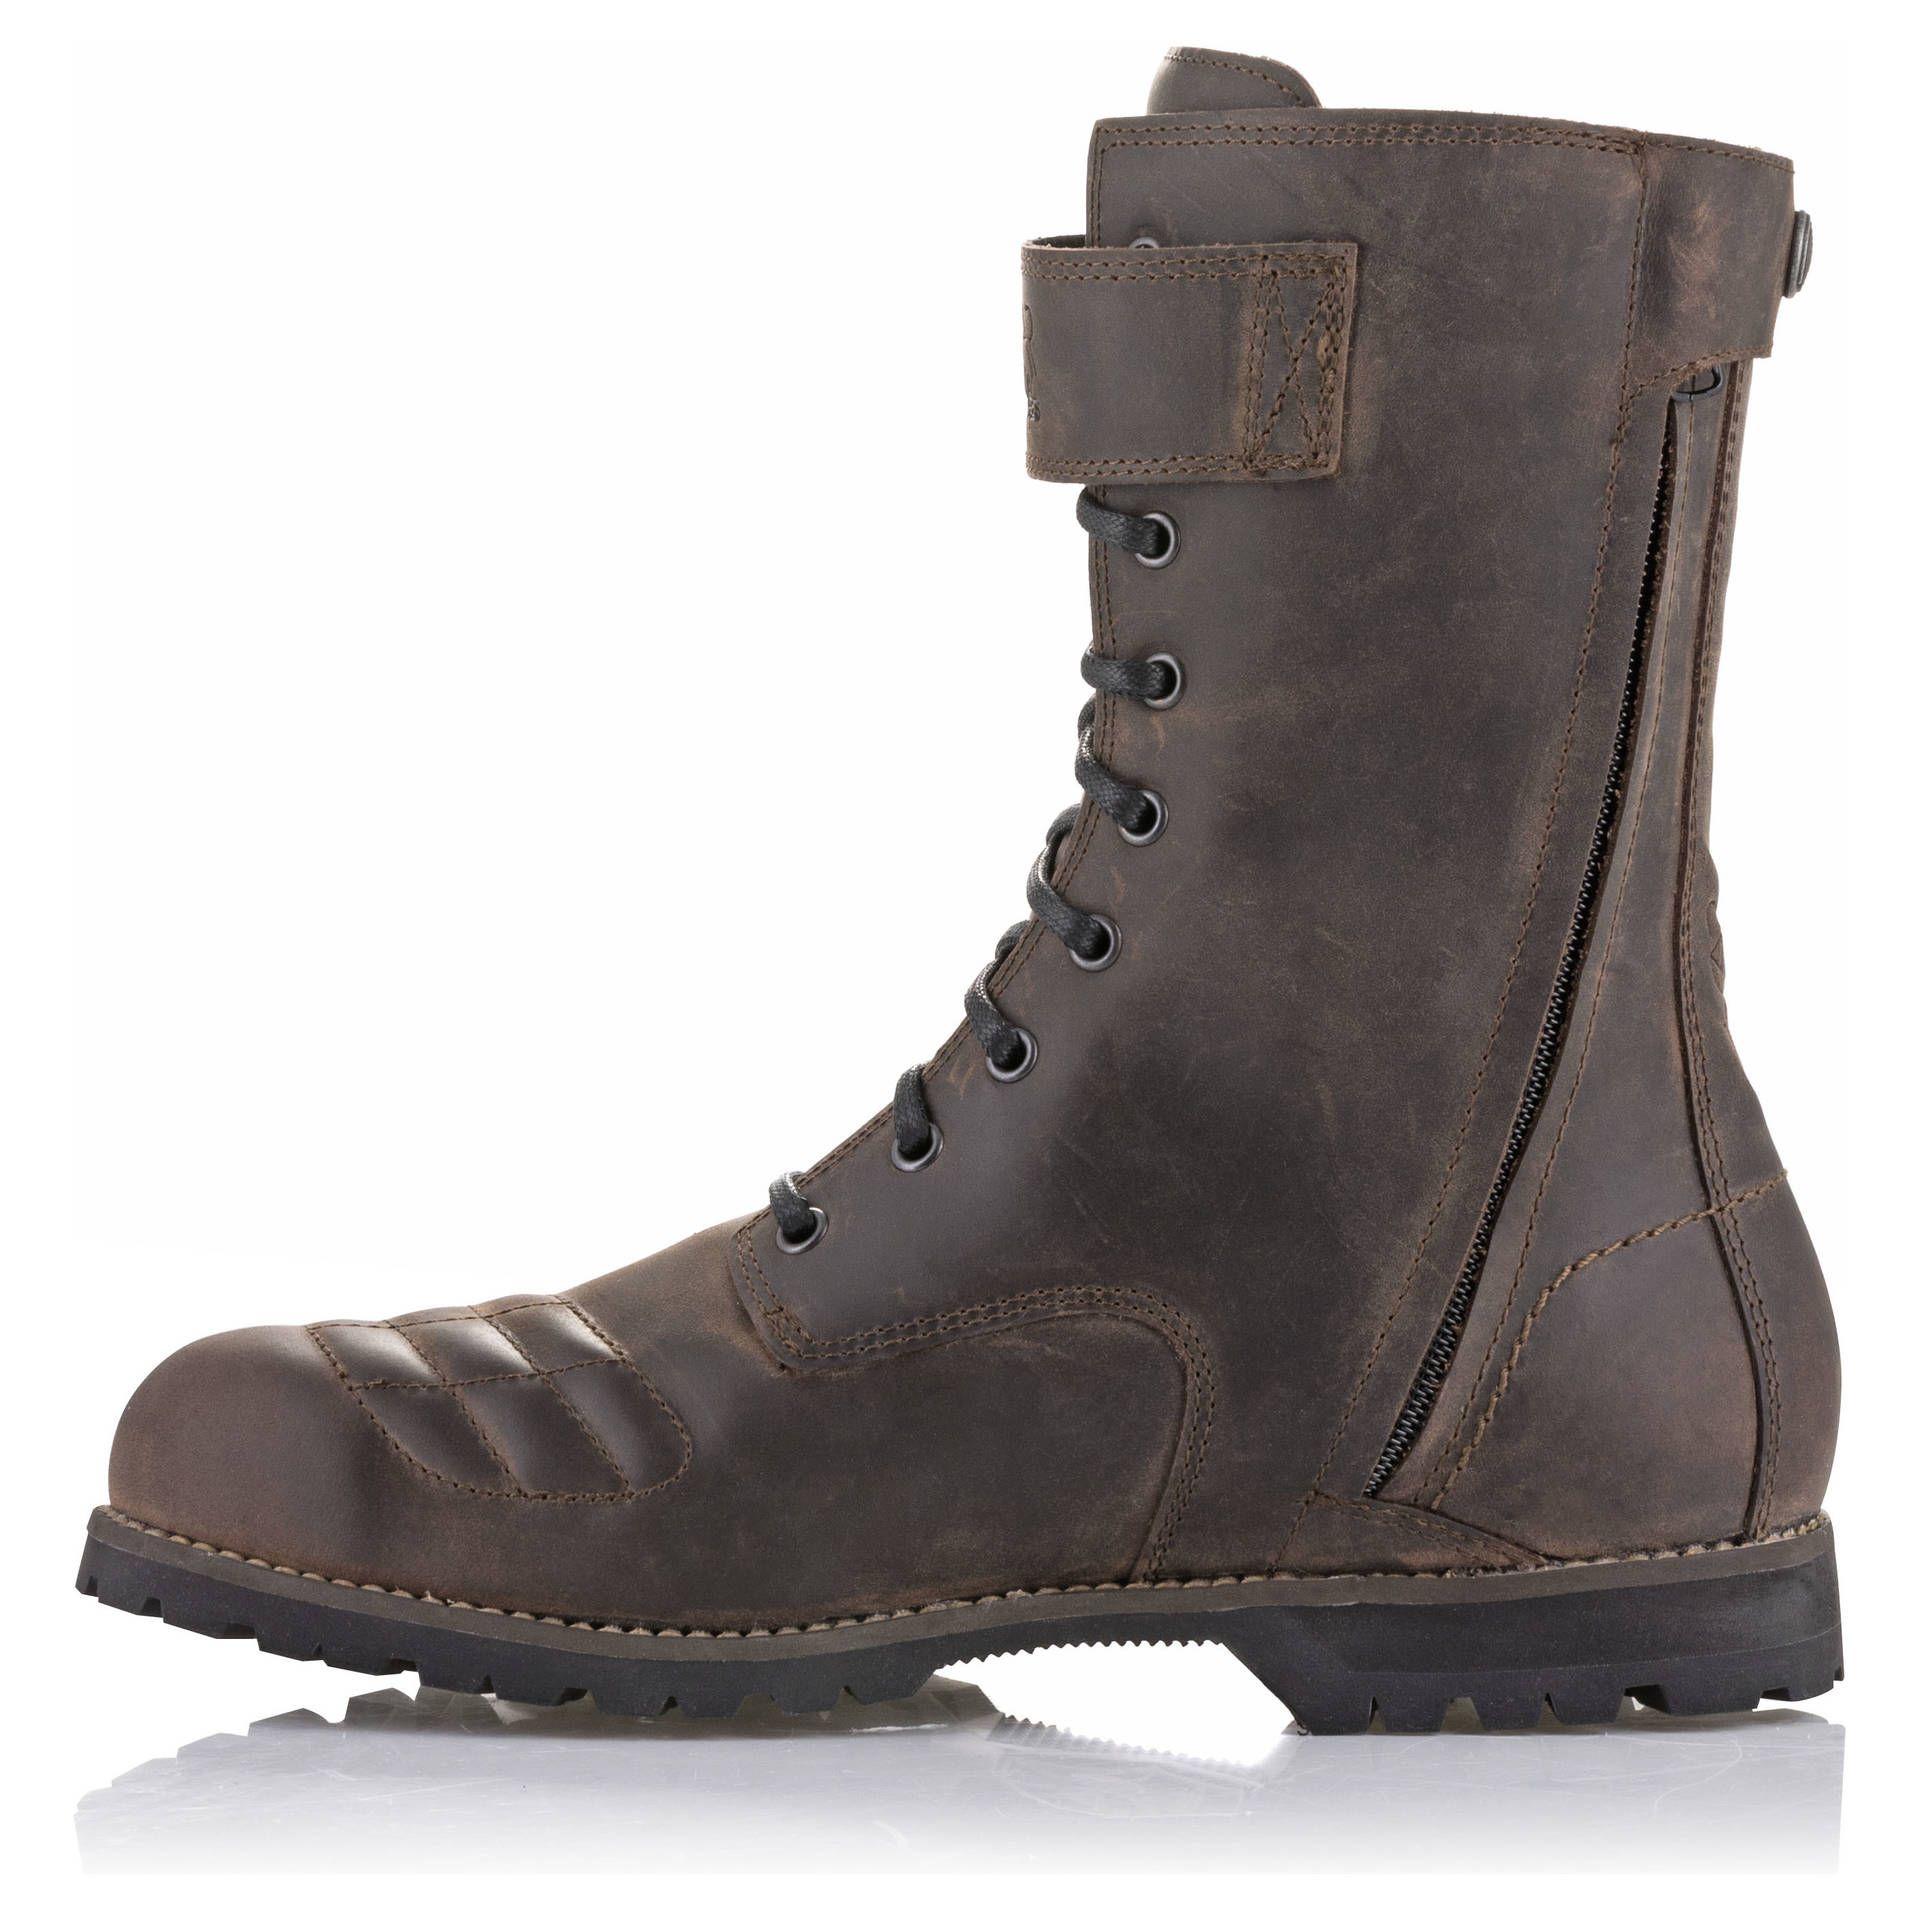 alpinestars oscar boots